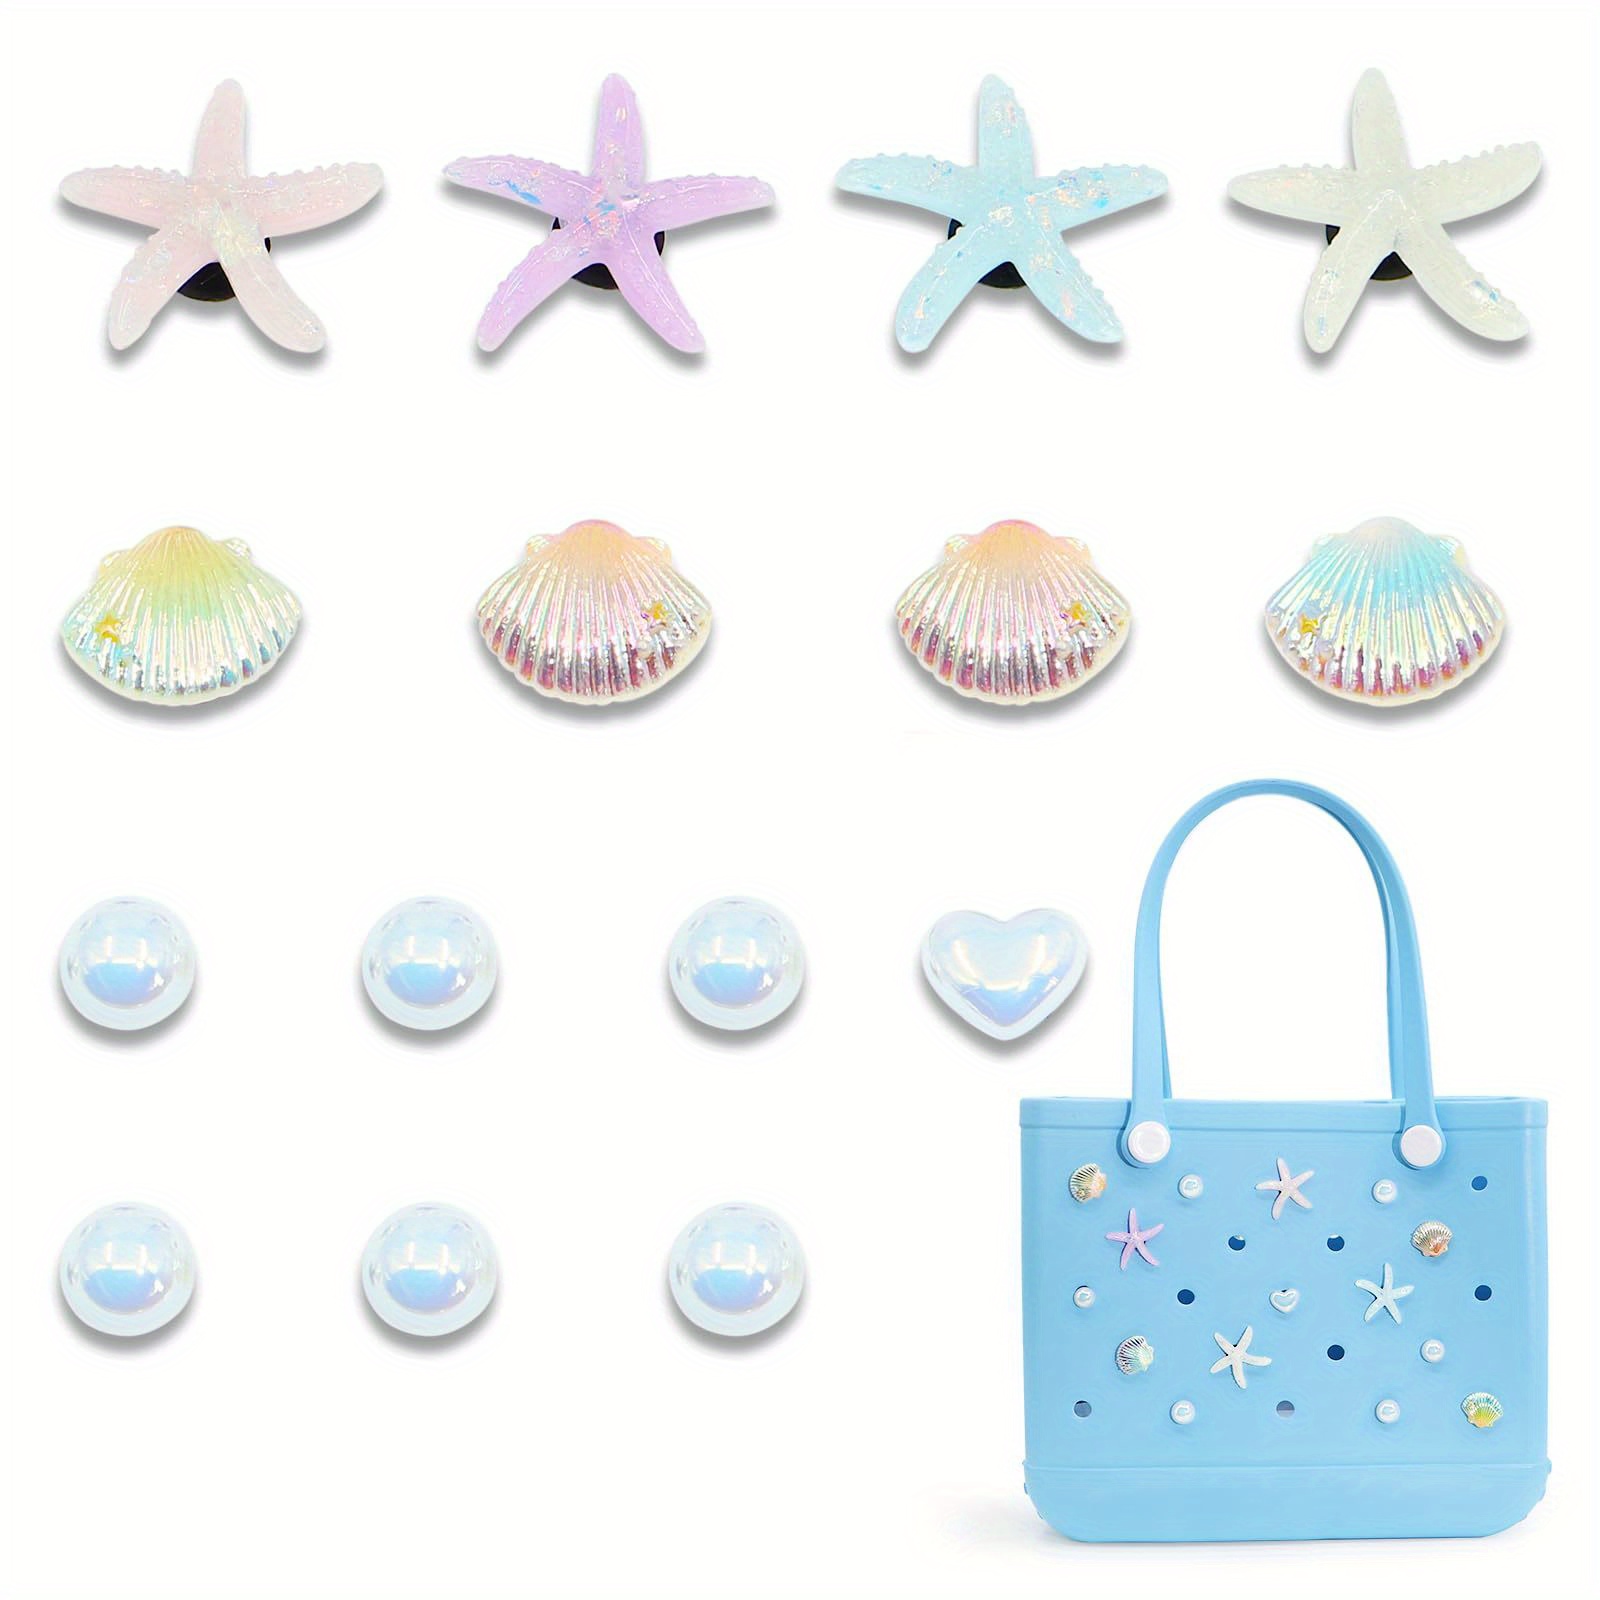 

15pcs Cute Inserts Charms For Beach Bag, Starfish Shells And Faux Pearls For Beach Bag Accessories, Beach Bag Tote Handbag Decoration